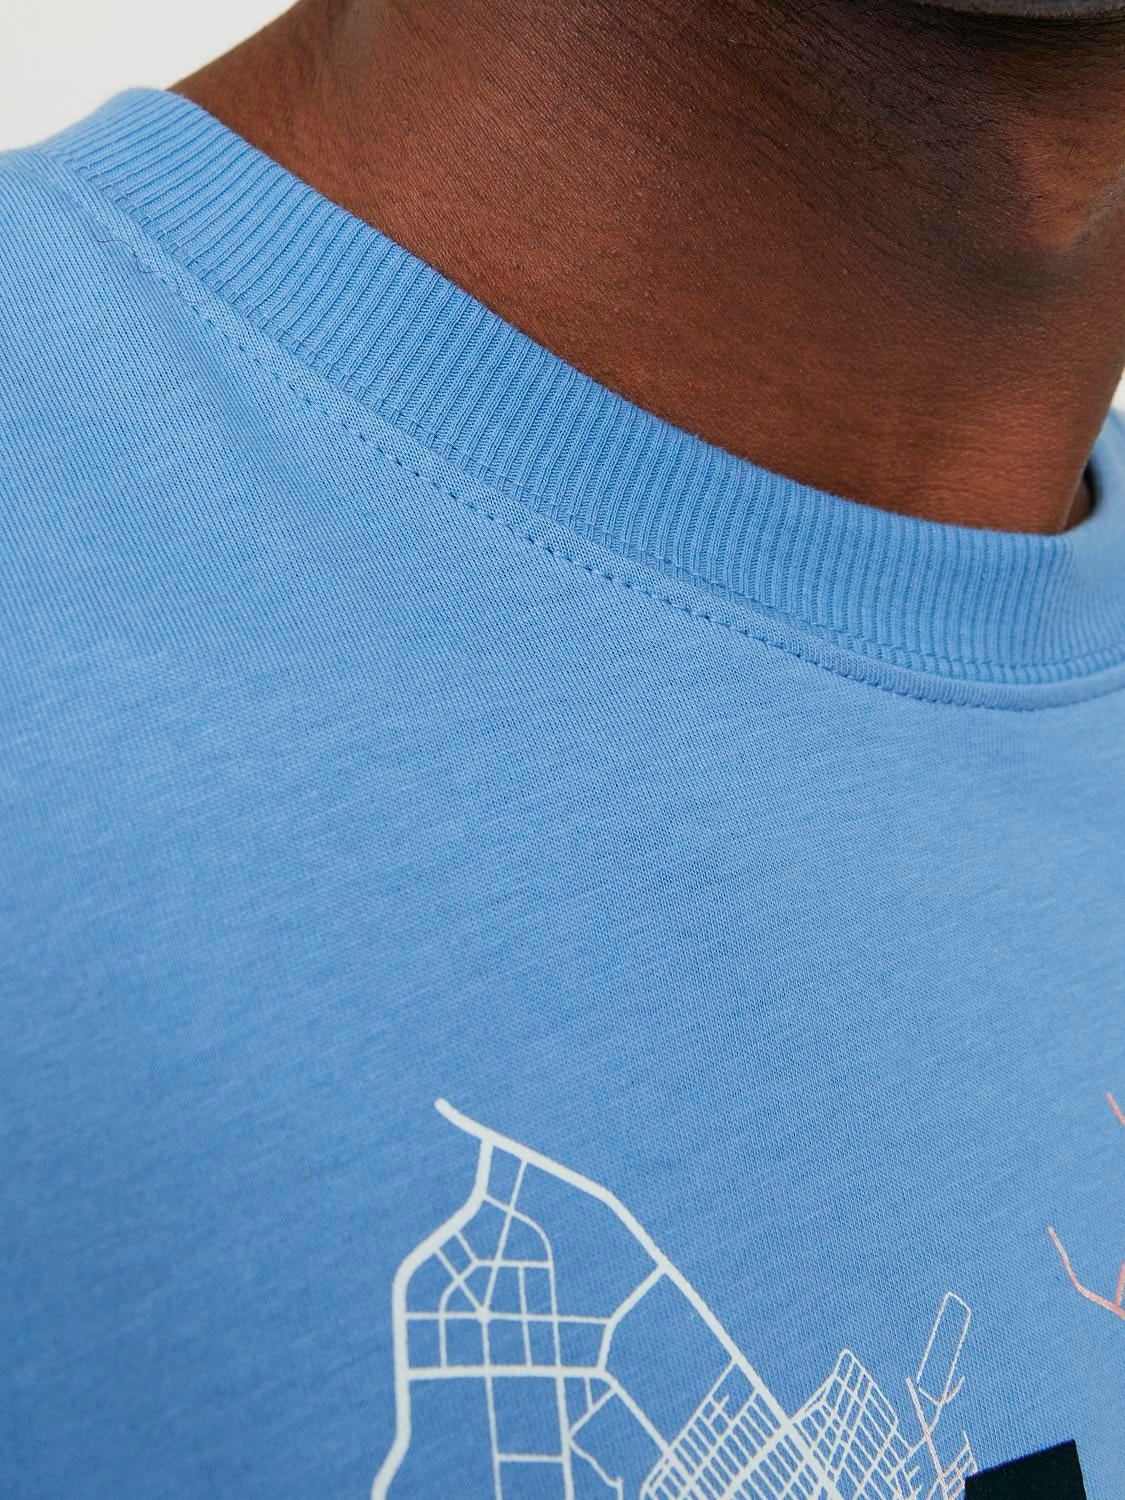 Jack & Jones Printed Crew neck T-shirt -Pacific Coast - 12252376